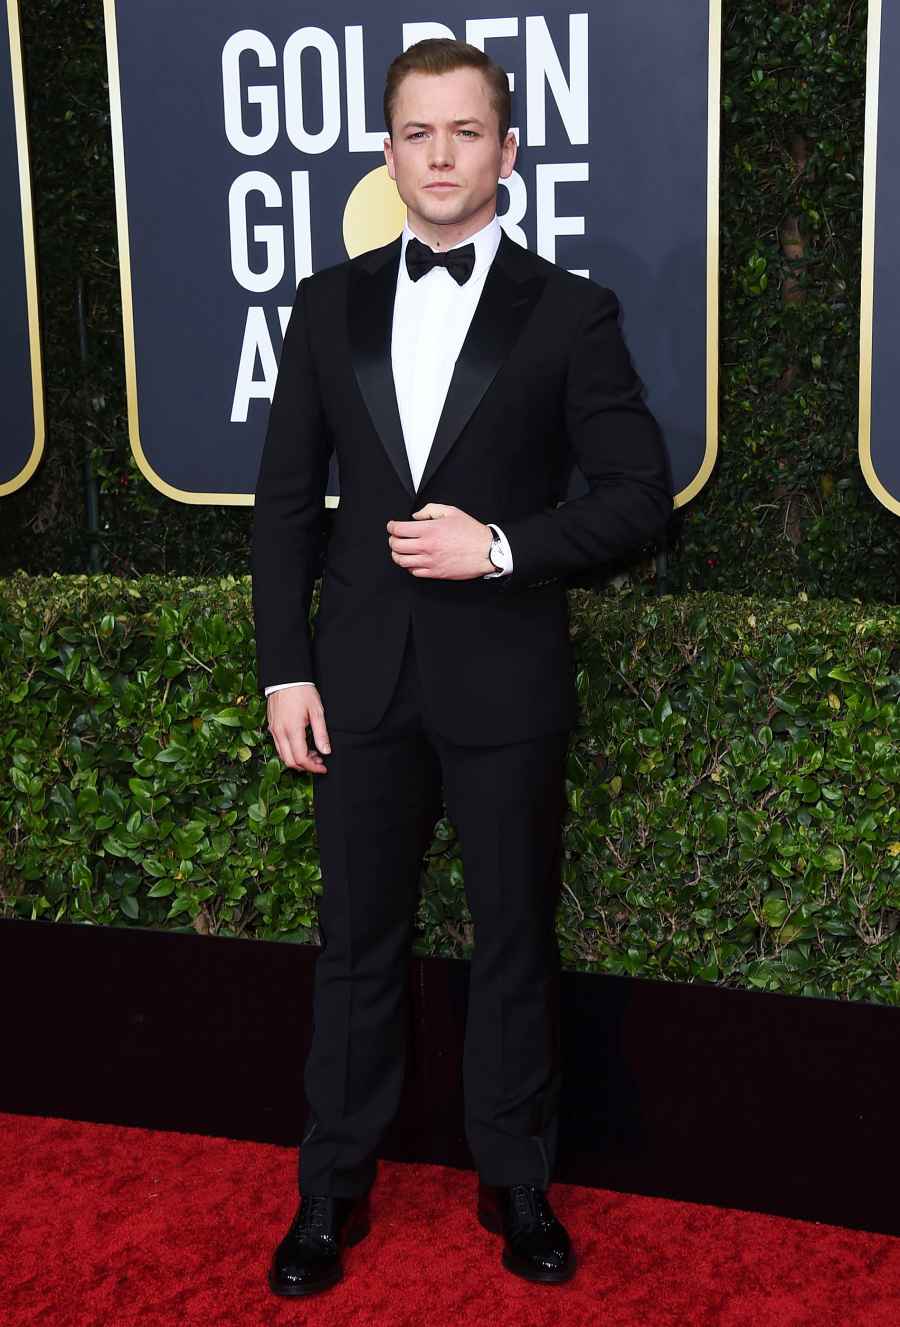 Golden Globes 2020 Hottest Hunks - Taron Egerton